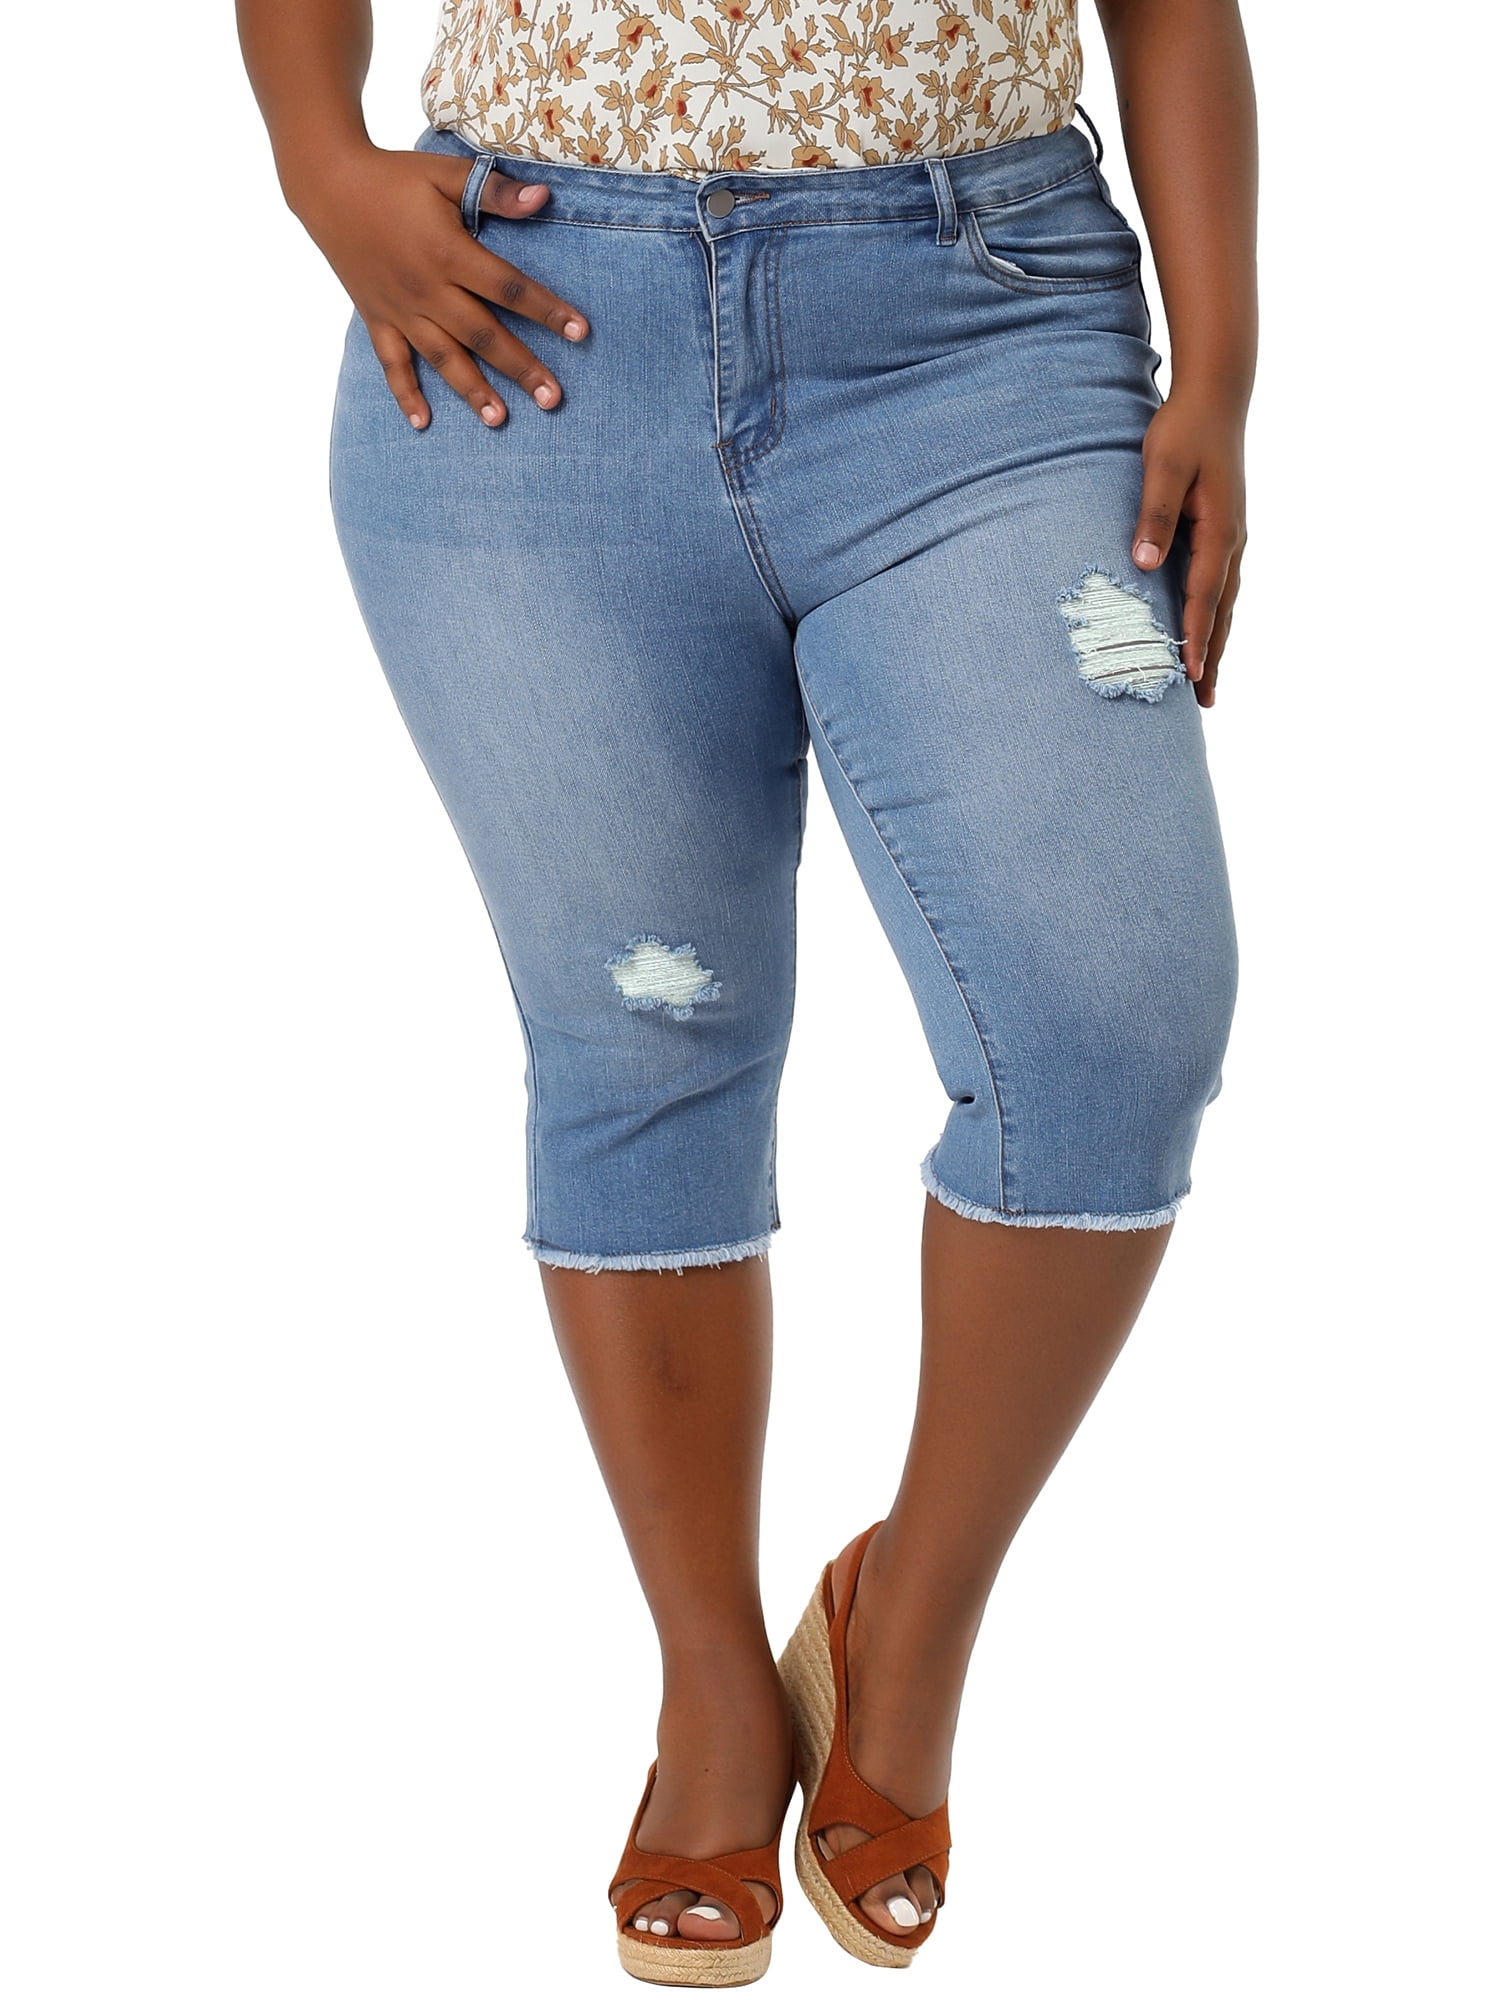 Ripped Capri Jeans - Inseam 20” 🛒Shop them at madepants.com